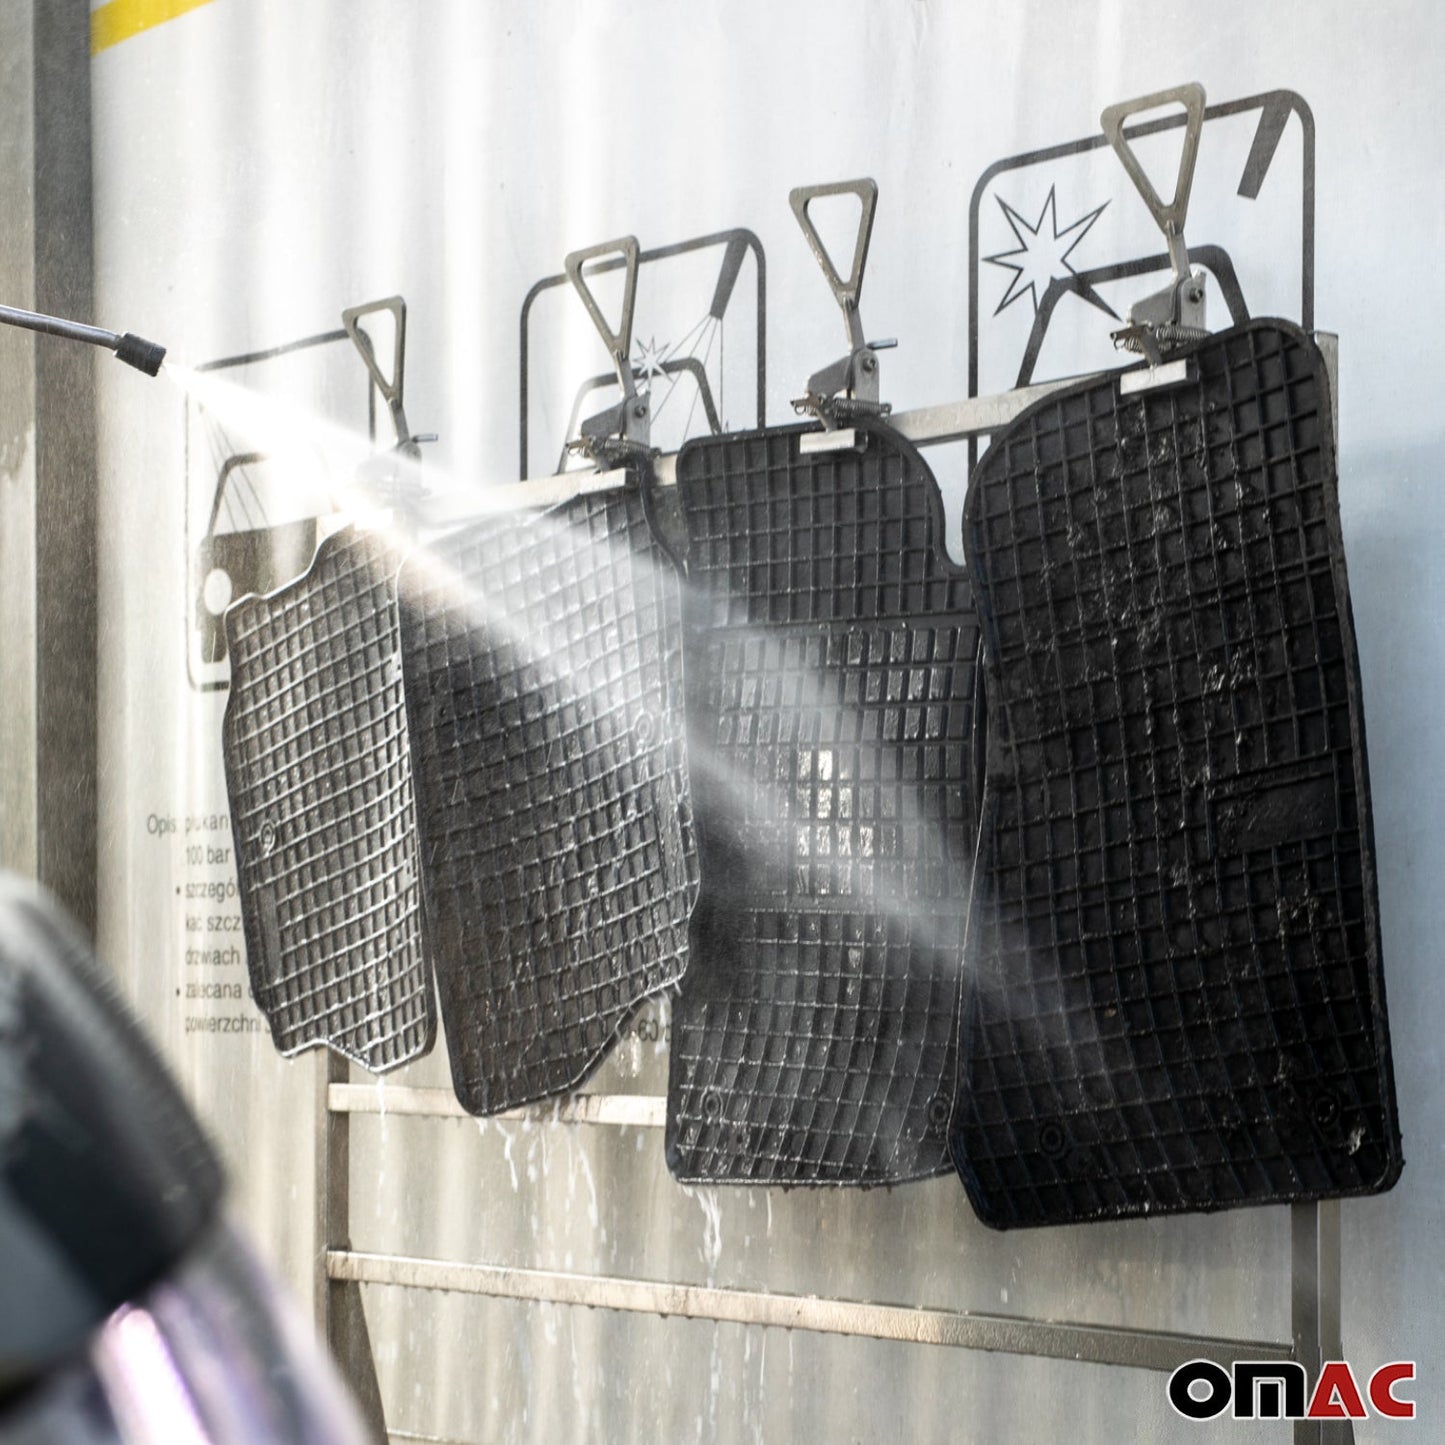 OMAC Floor Mats Cargo Liner Set for Buick Regal 2011-2017 Black All-Weather TPE 5215YPS1-484